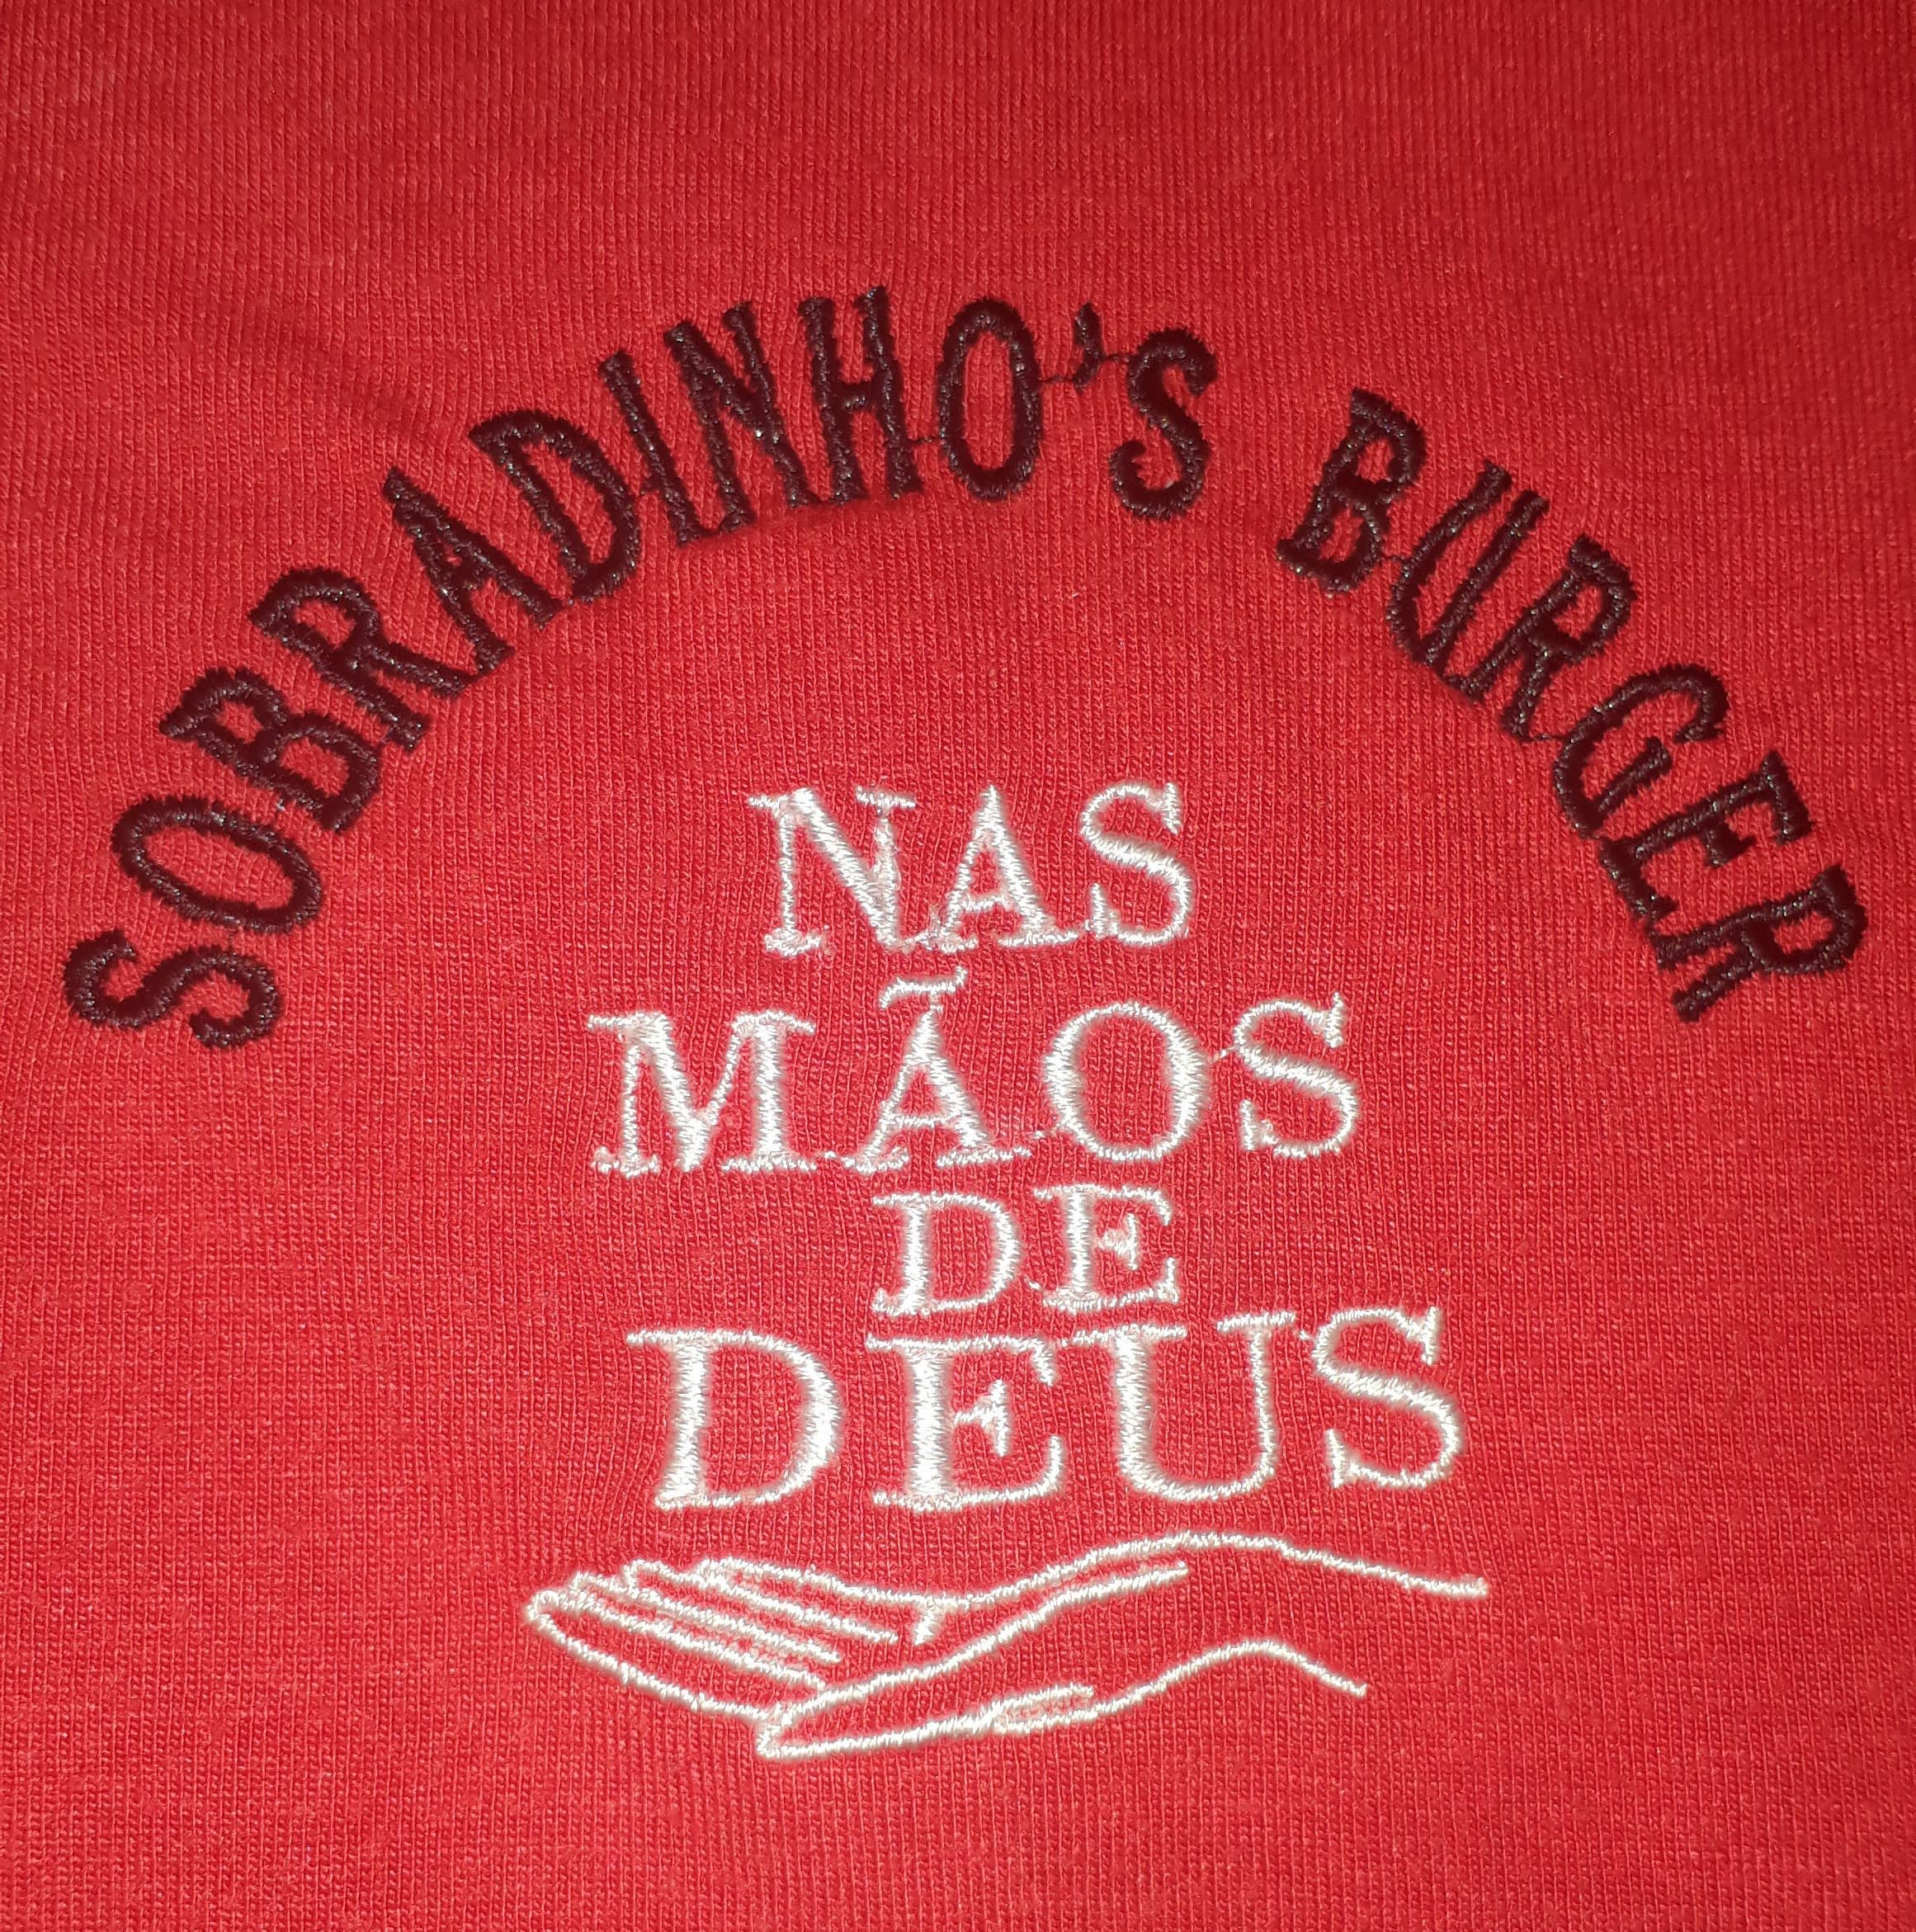 Sobradinho's Burger